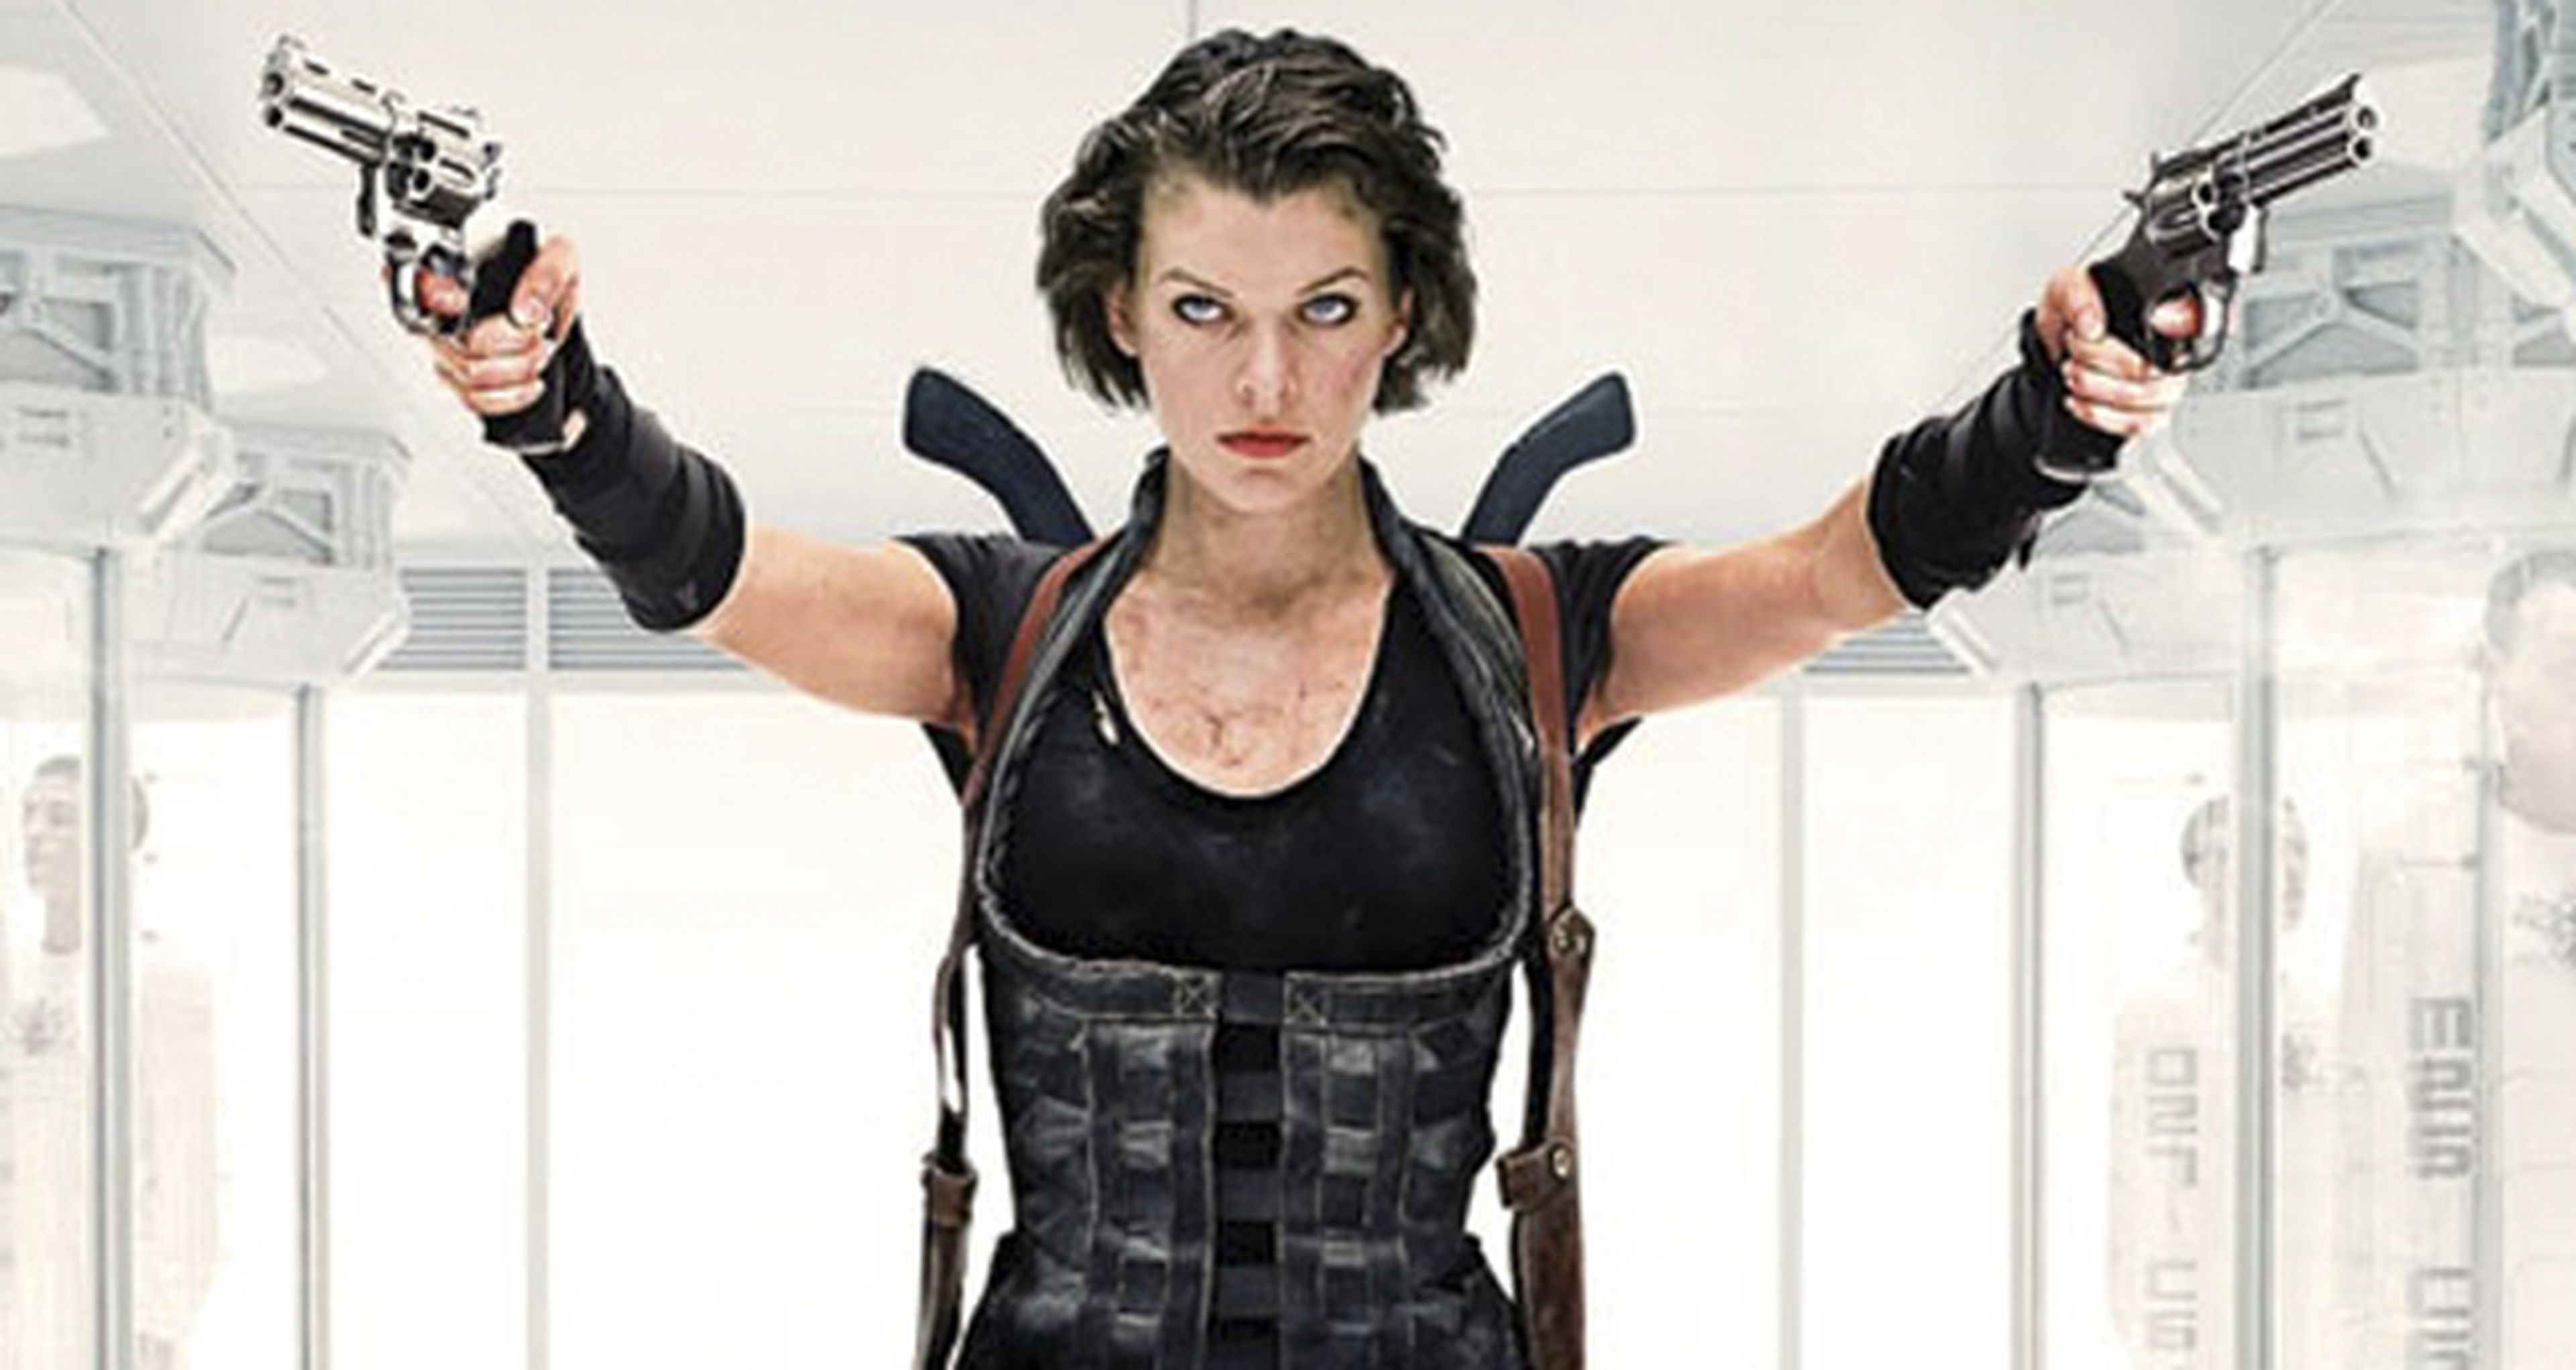 Resident Evil: The Final Chapter muestra a Milla Jovovich y Ali Larter juntas